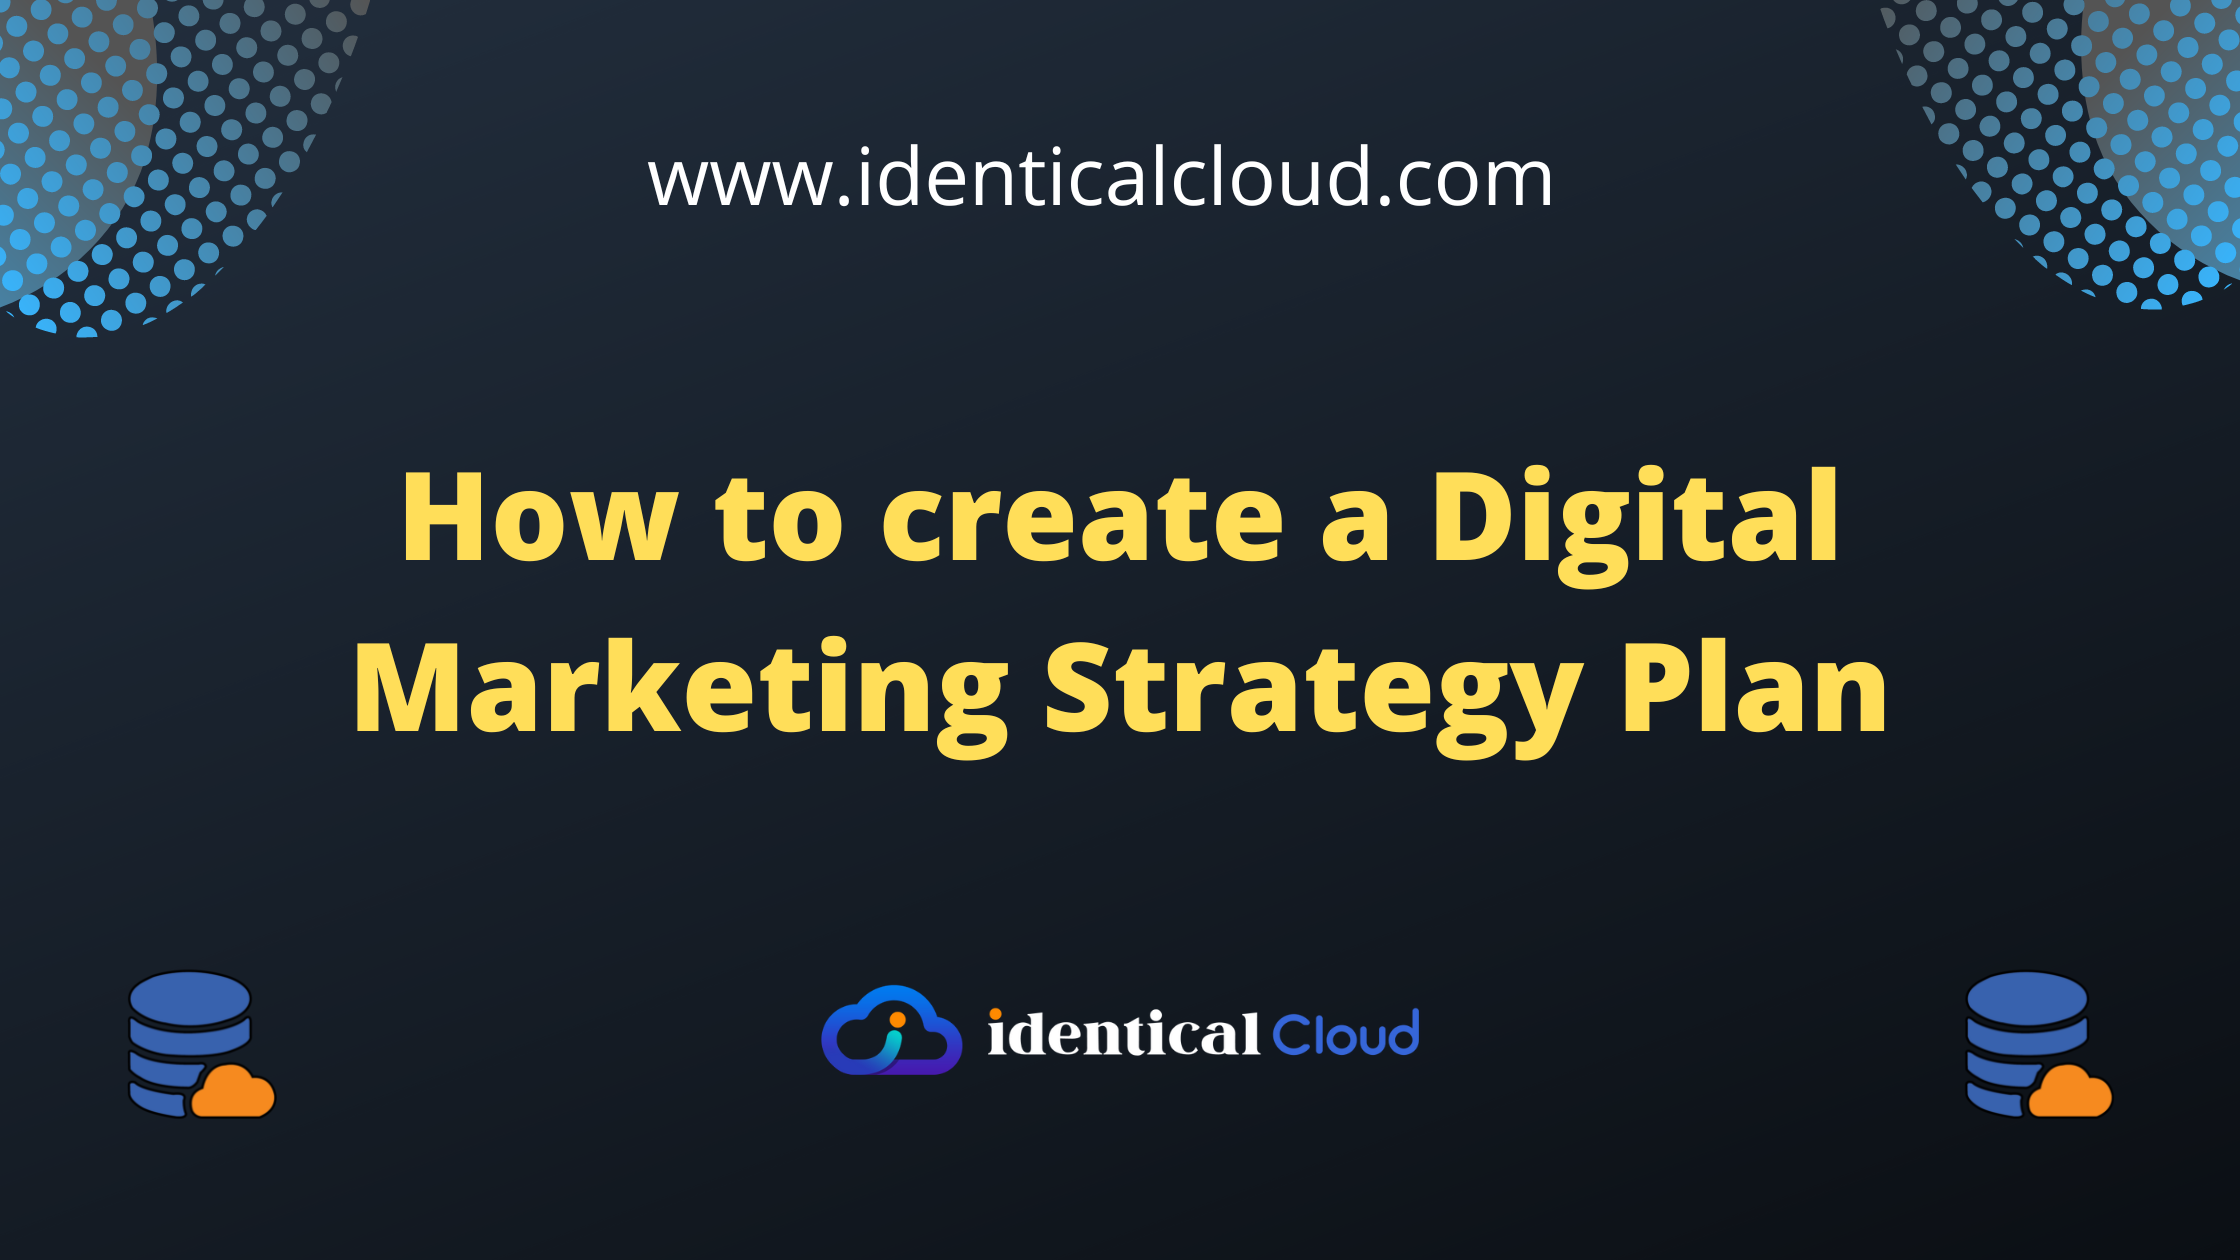 How to create a Digital Marketing Strategy Plan - identicalcloud.com